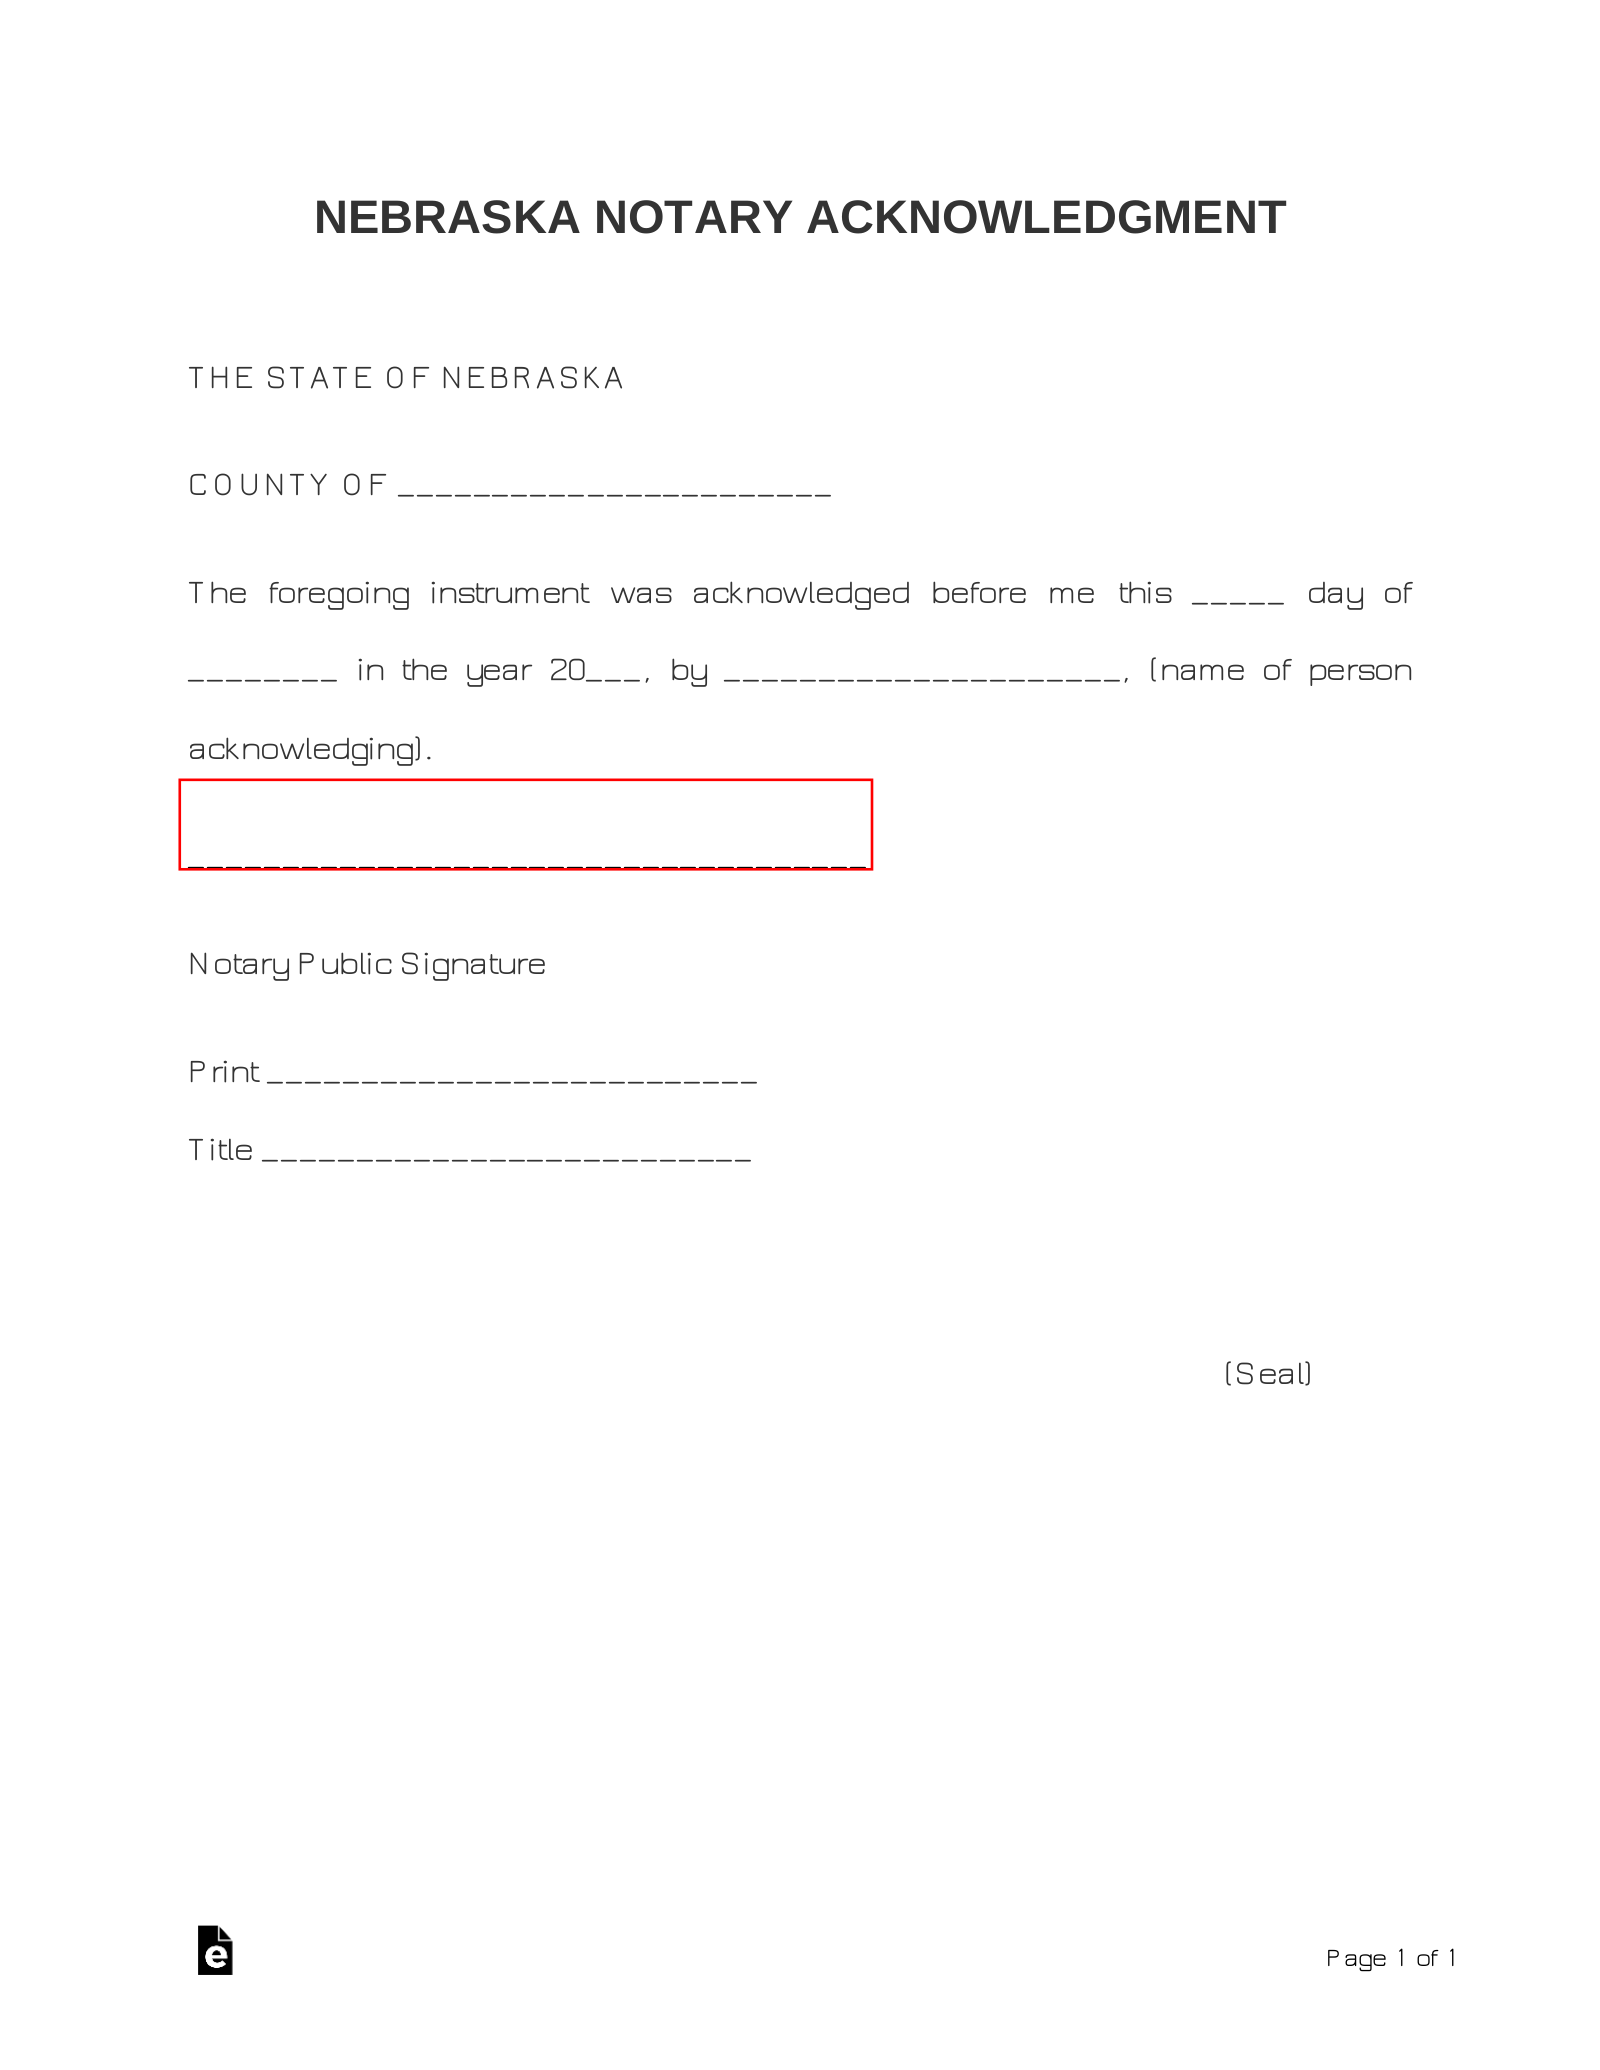 Nebraska Notary Acknowledgment Form